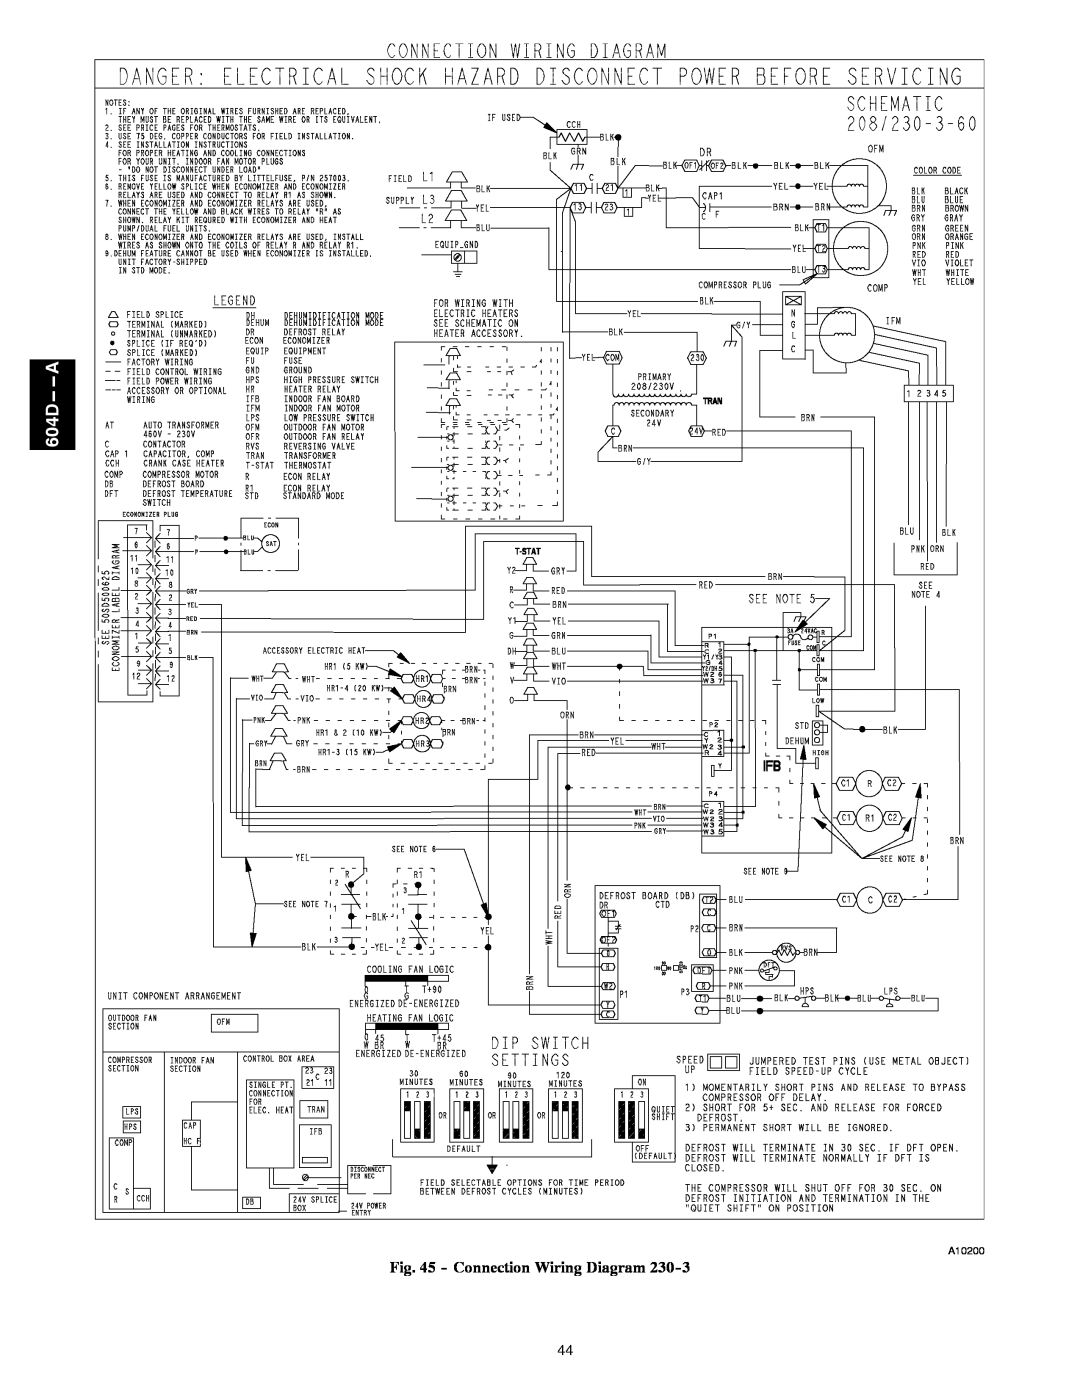 Bryant 604D--A installation instructions Connection Wiring Diagram, 604D A, R R1 C, Sat R C, Rvs Dft 